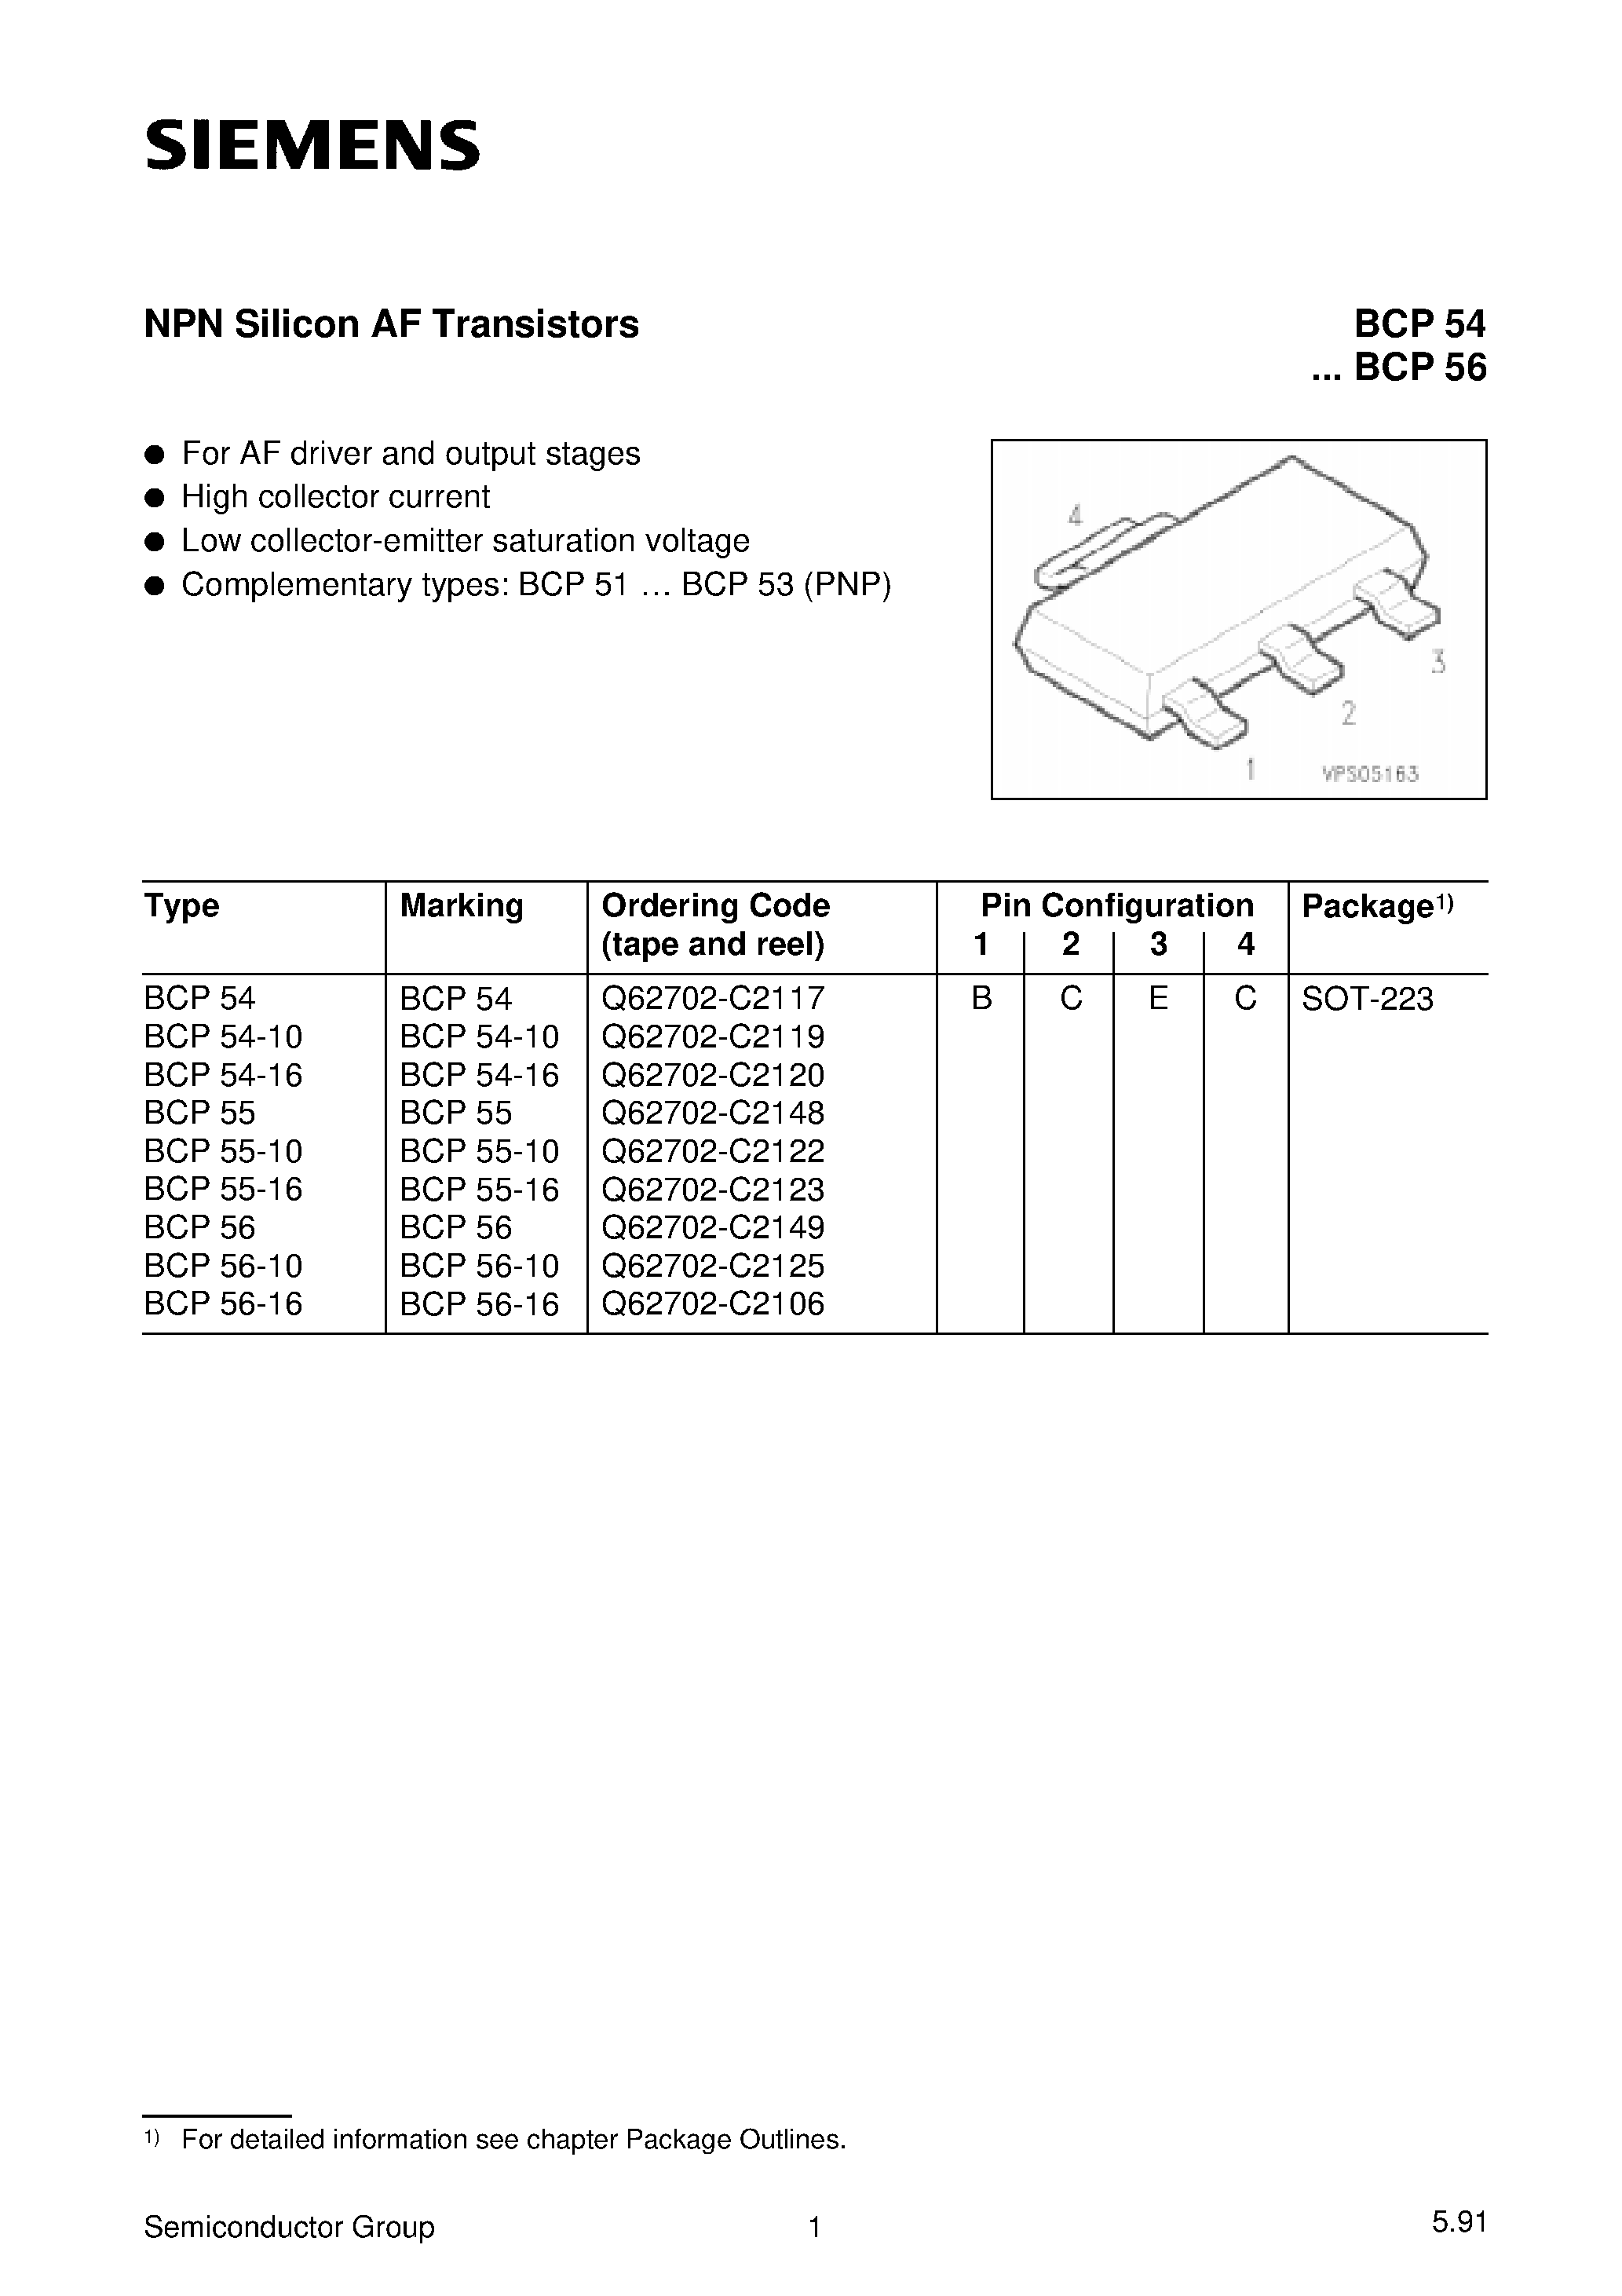 Даташит BCP56-16 - NPN Silicon AF Transistors (For AF driver and output stages High collector current) страница 1